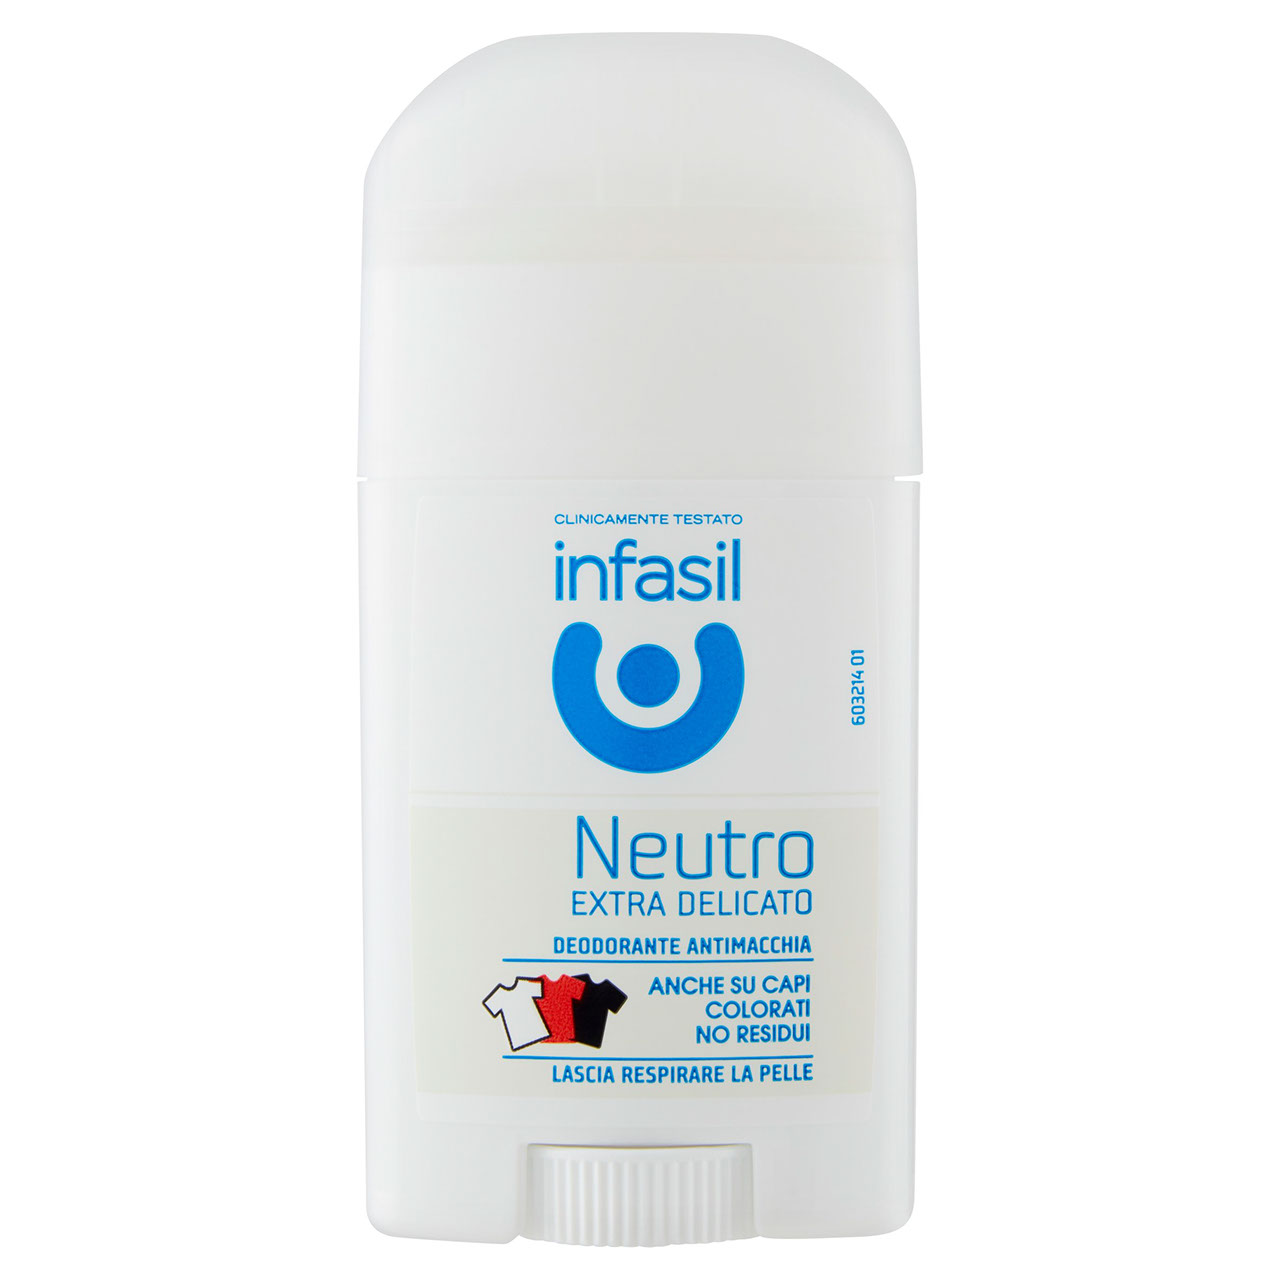 infasil Neutro Extra Delicato in vendita online